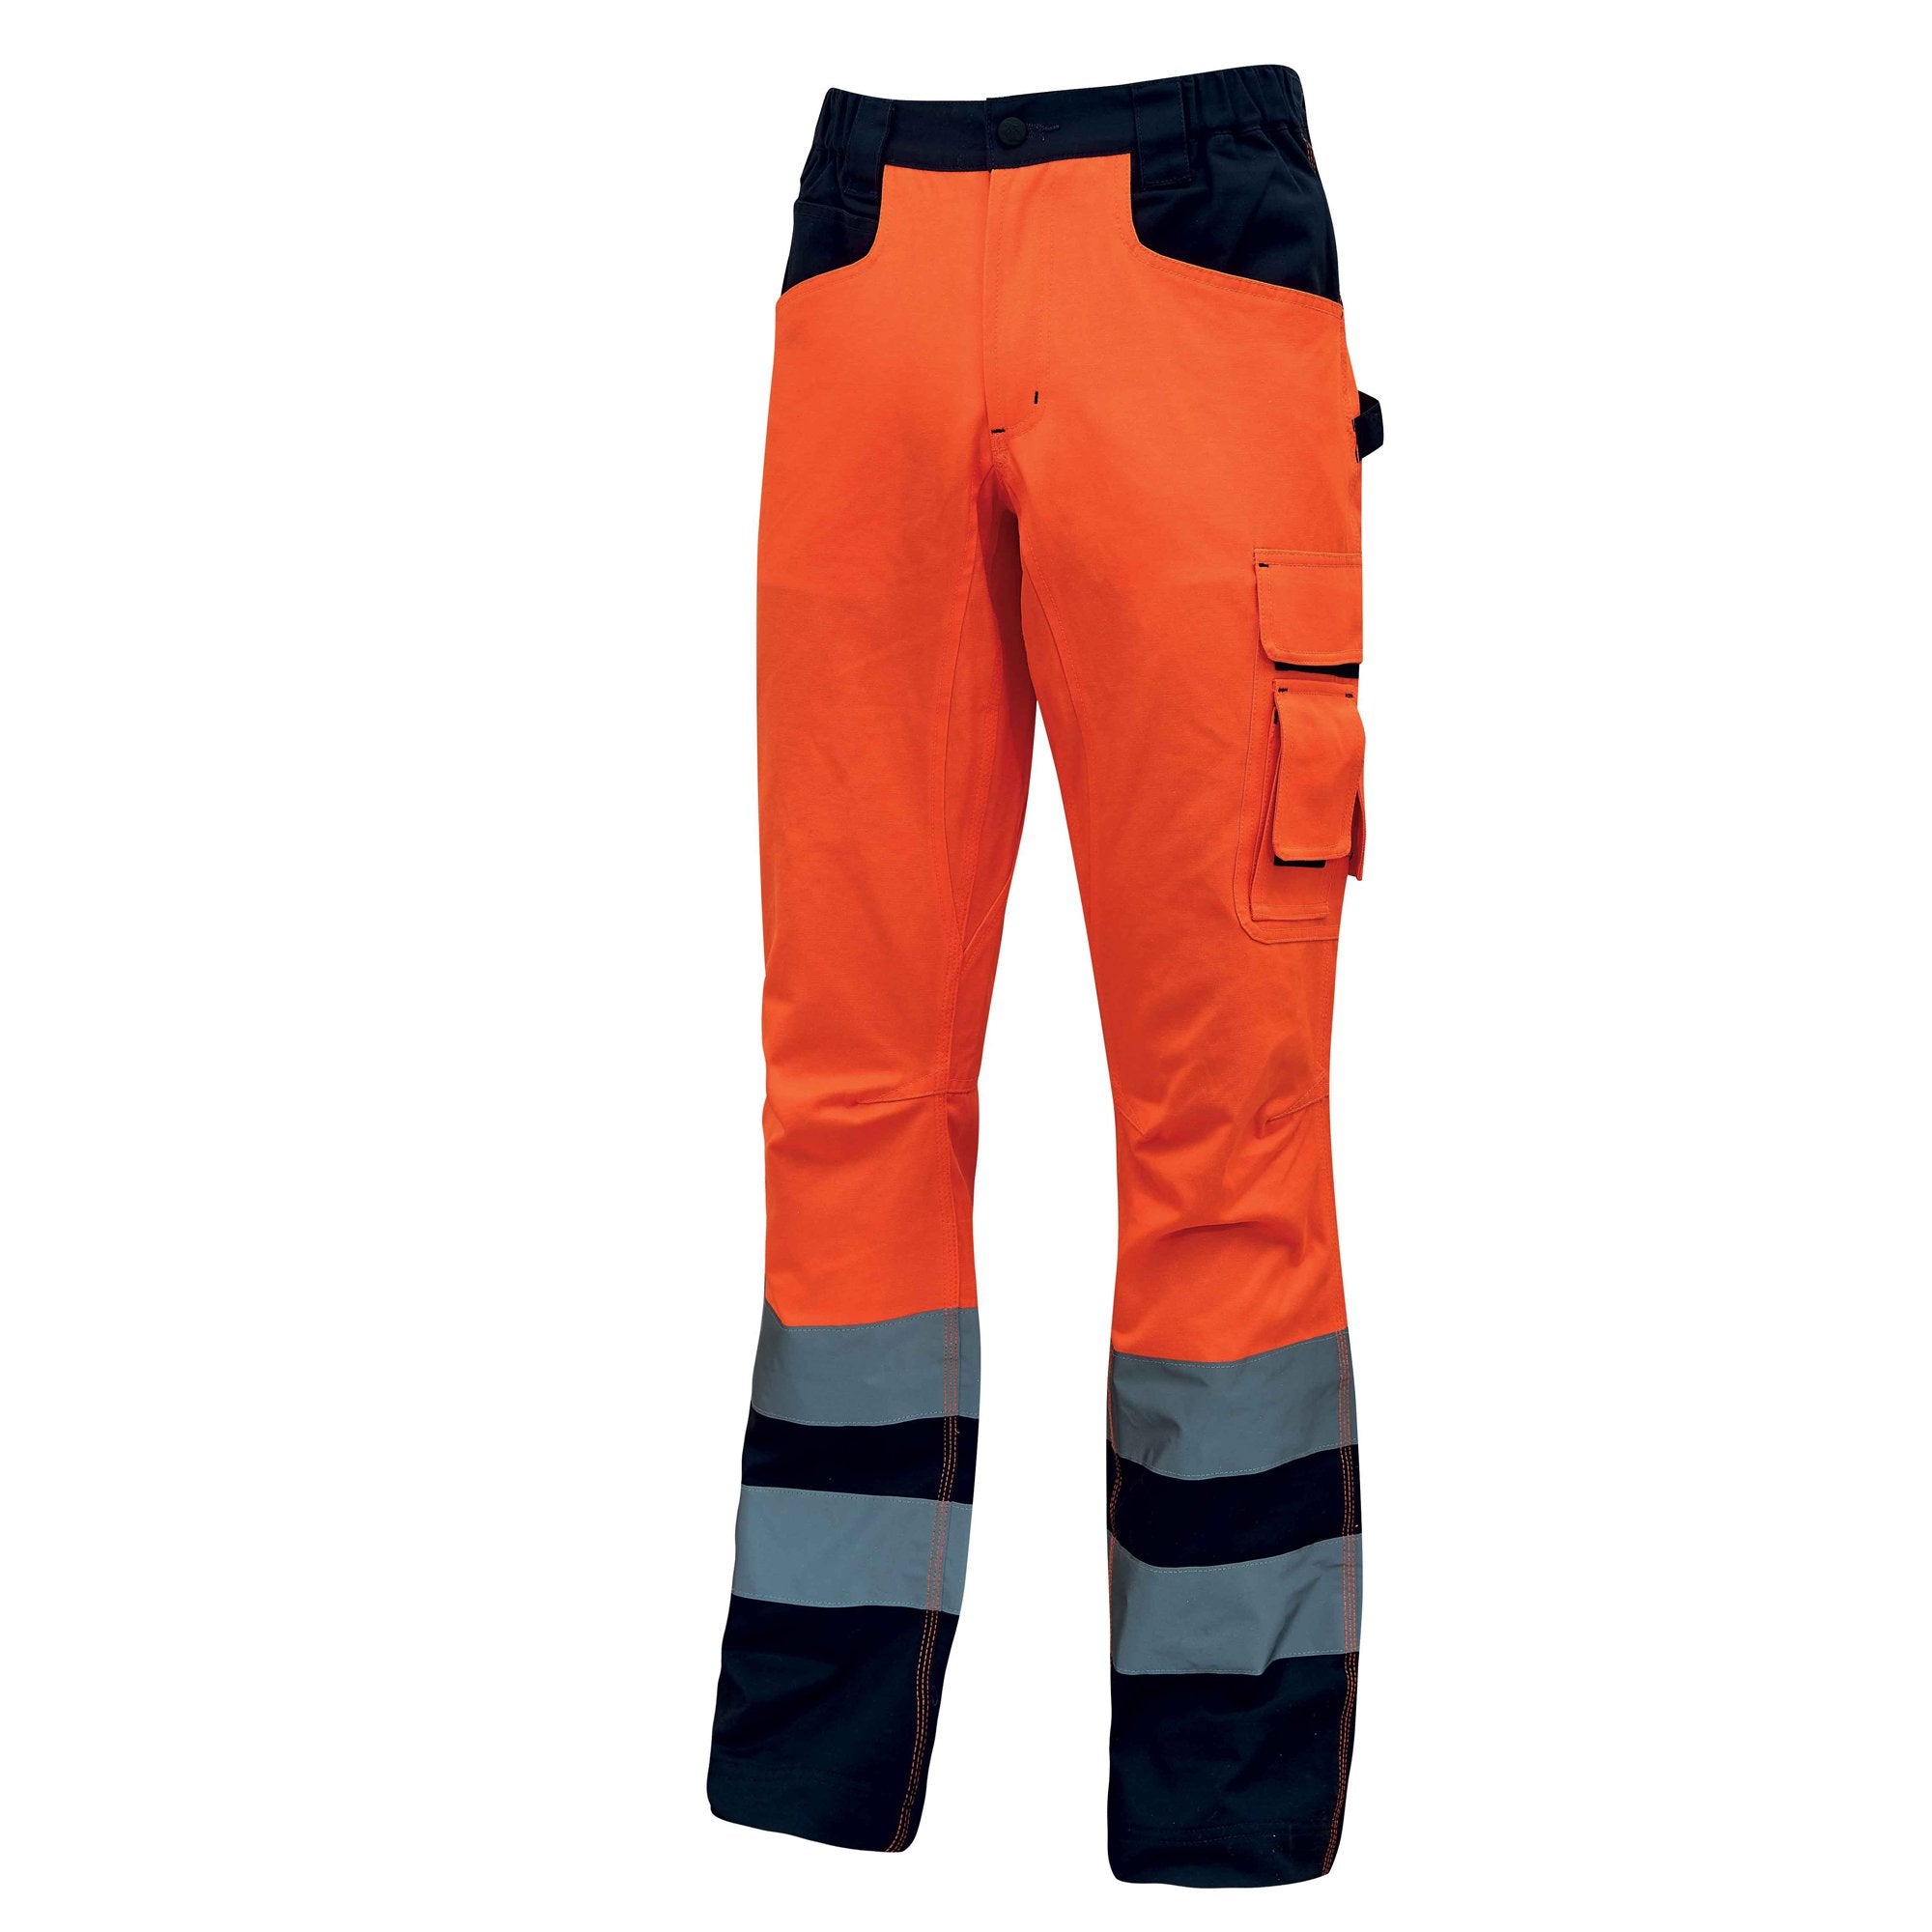 u-power-pantalone-invernale-alta-visibilita-beacon-arancio-fluo-taglia-xxl